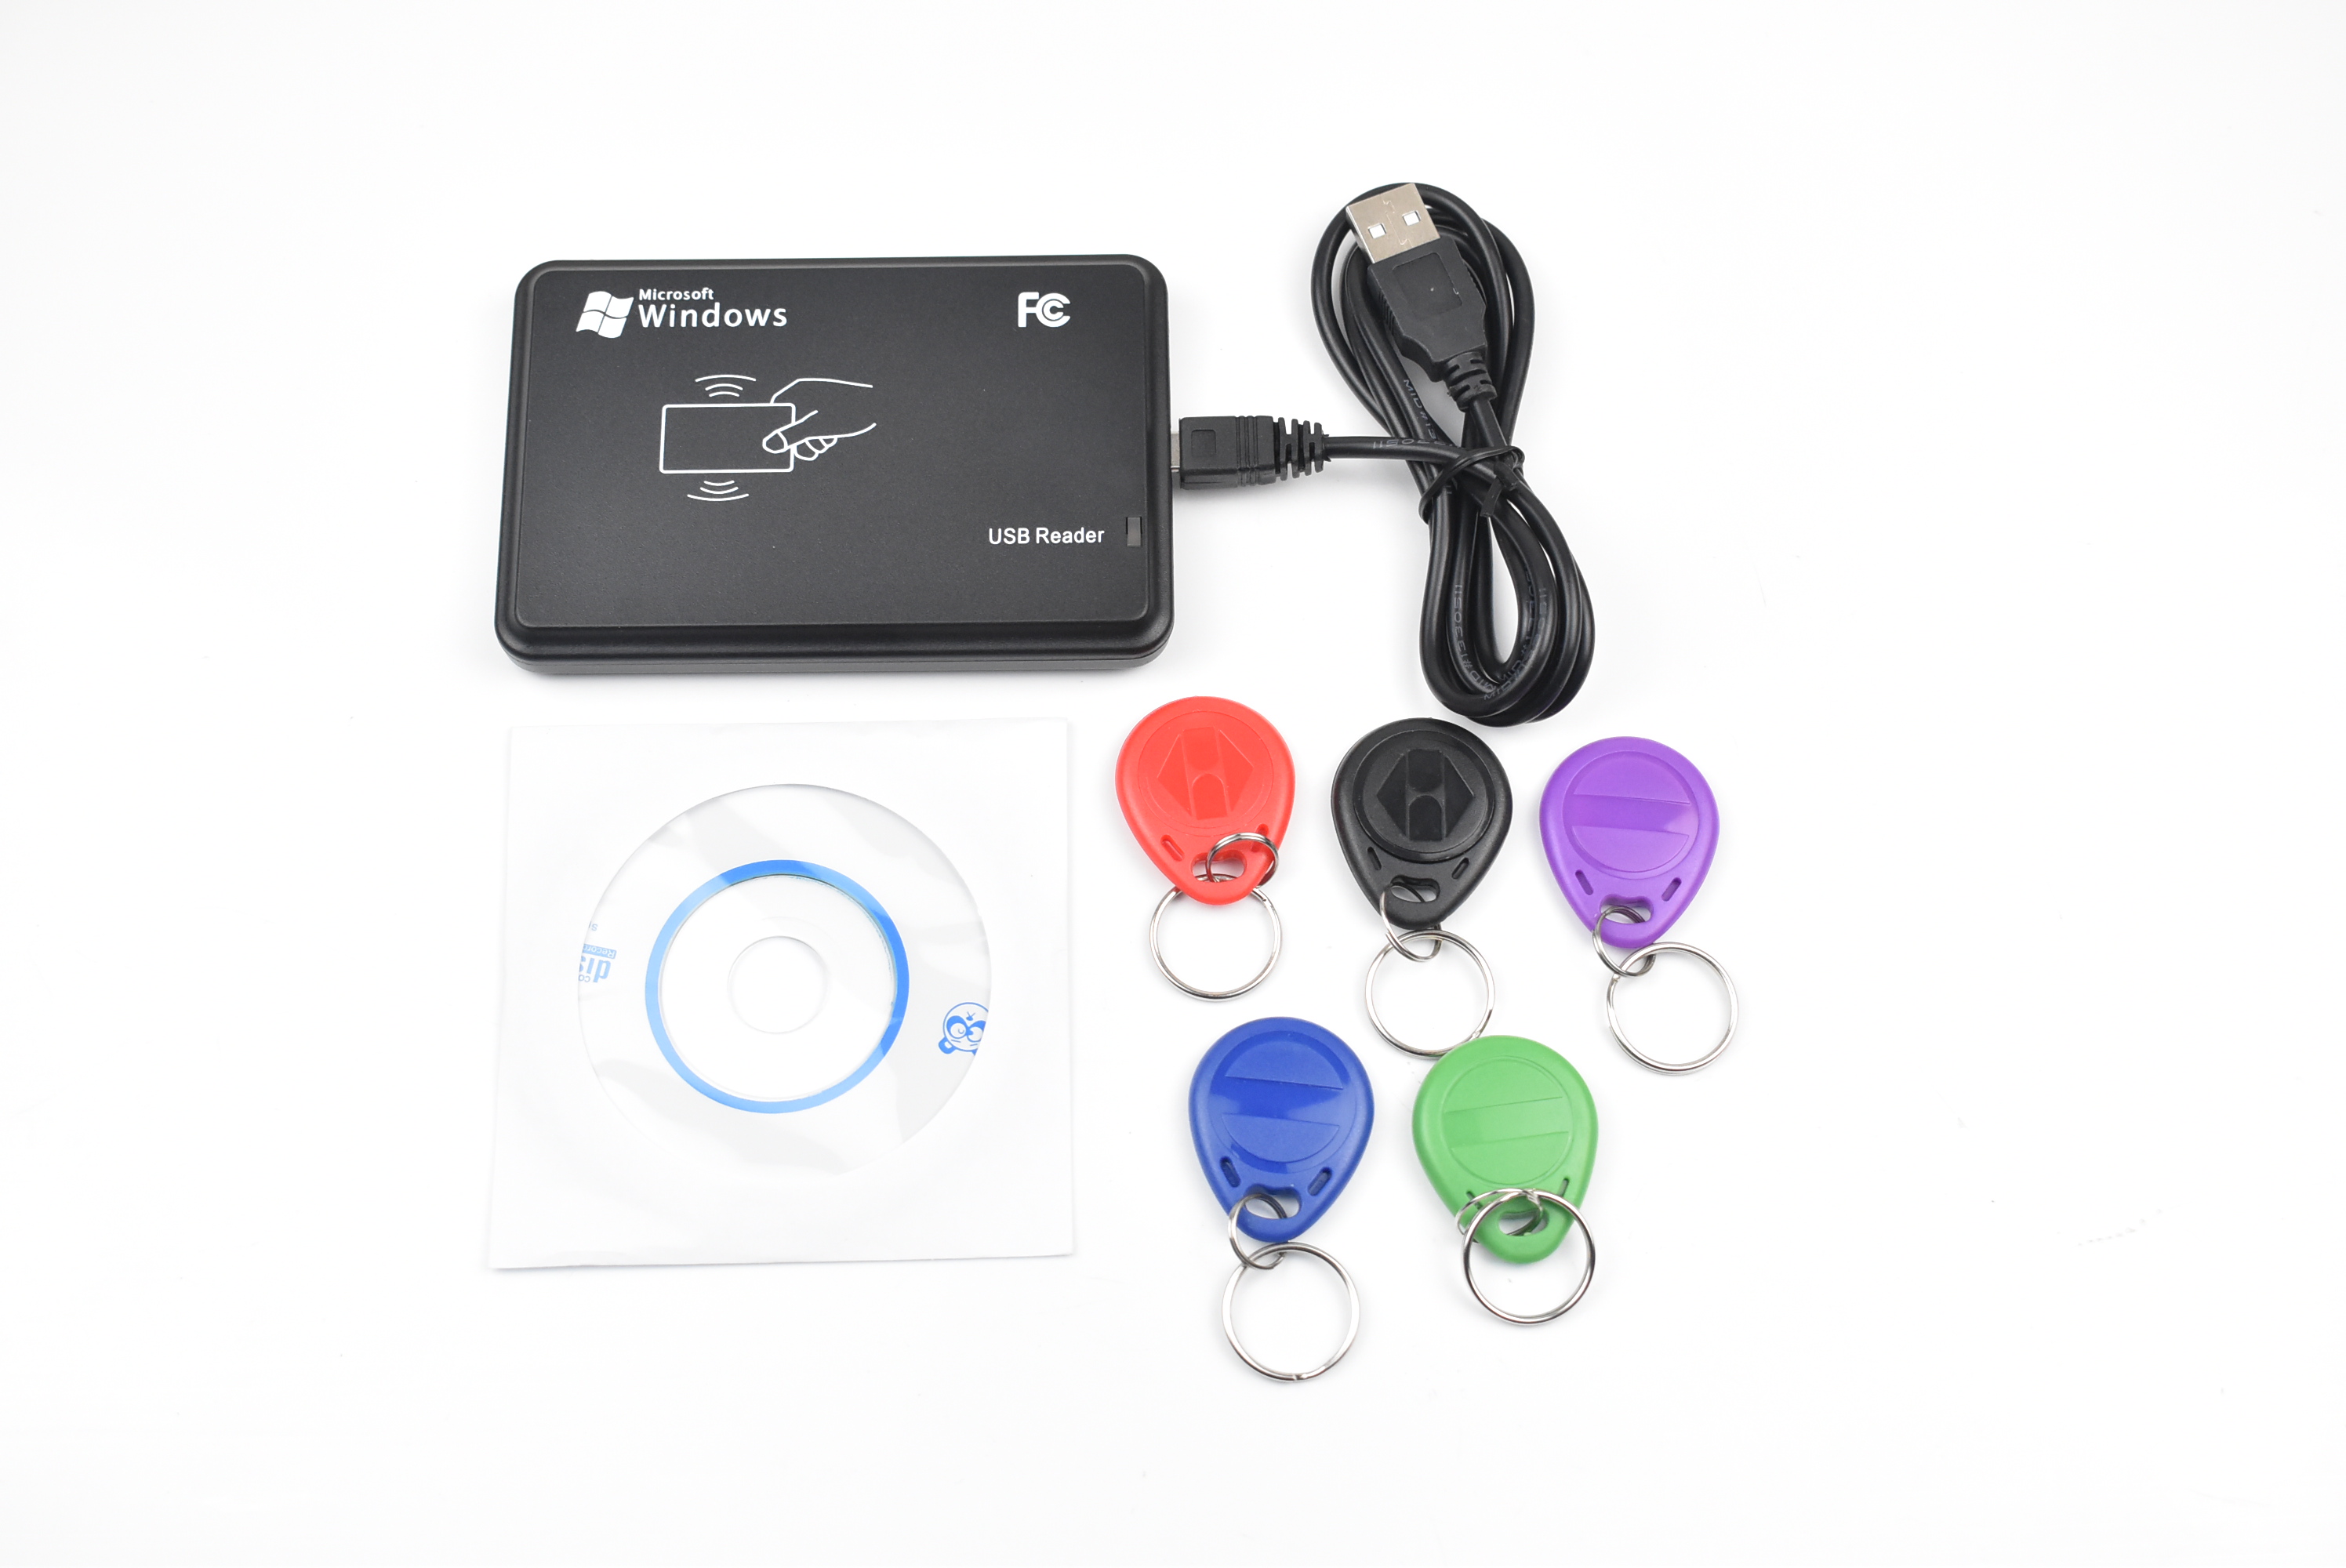 125KHz USB Proximity Access Control Smart RFID ID Card Reader and Writer Copier+5pcs EM4350 T5577 Tags+ Software CD